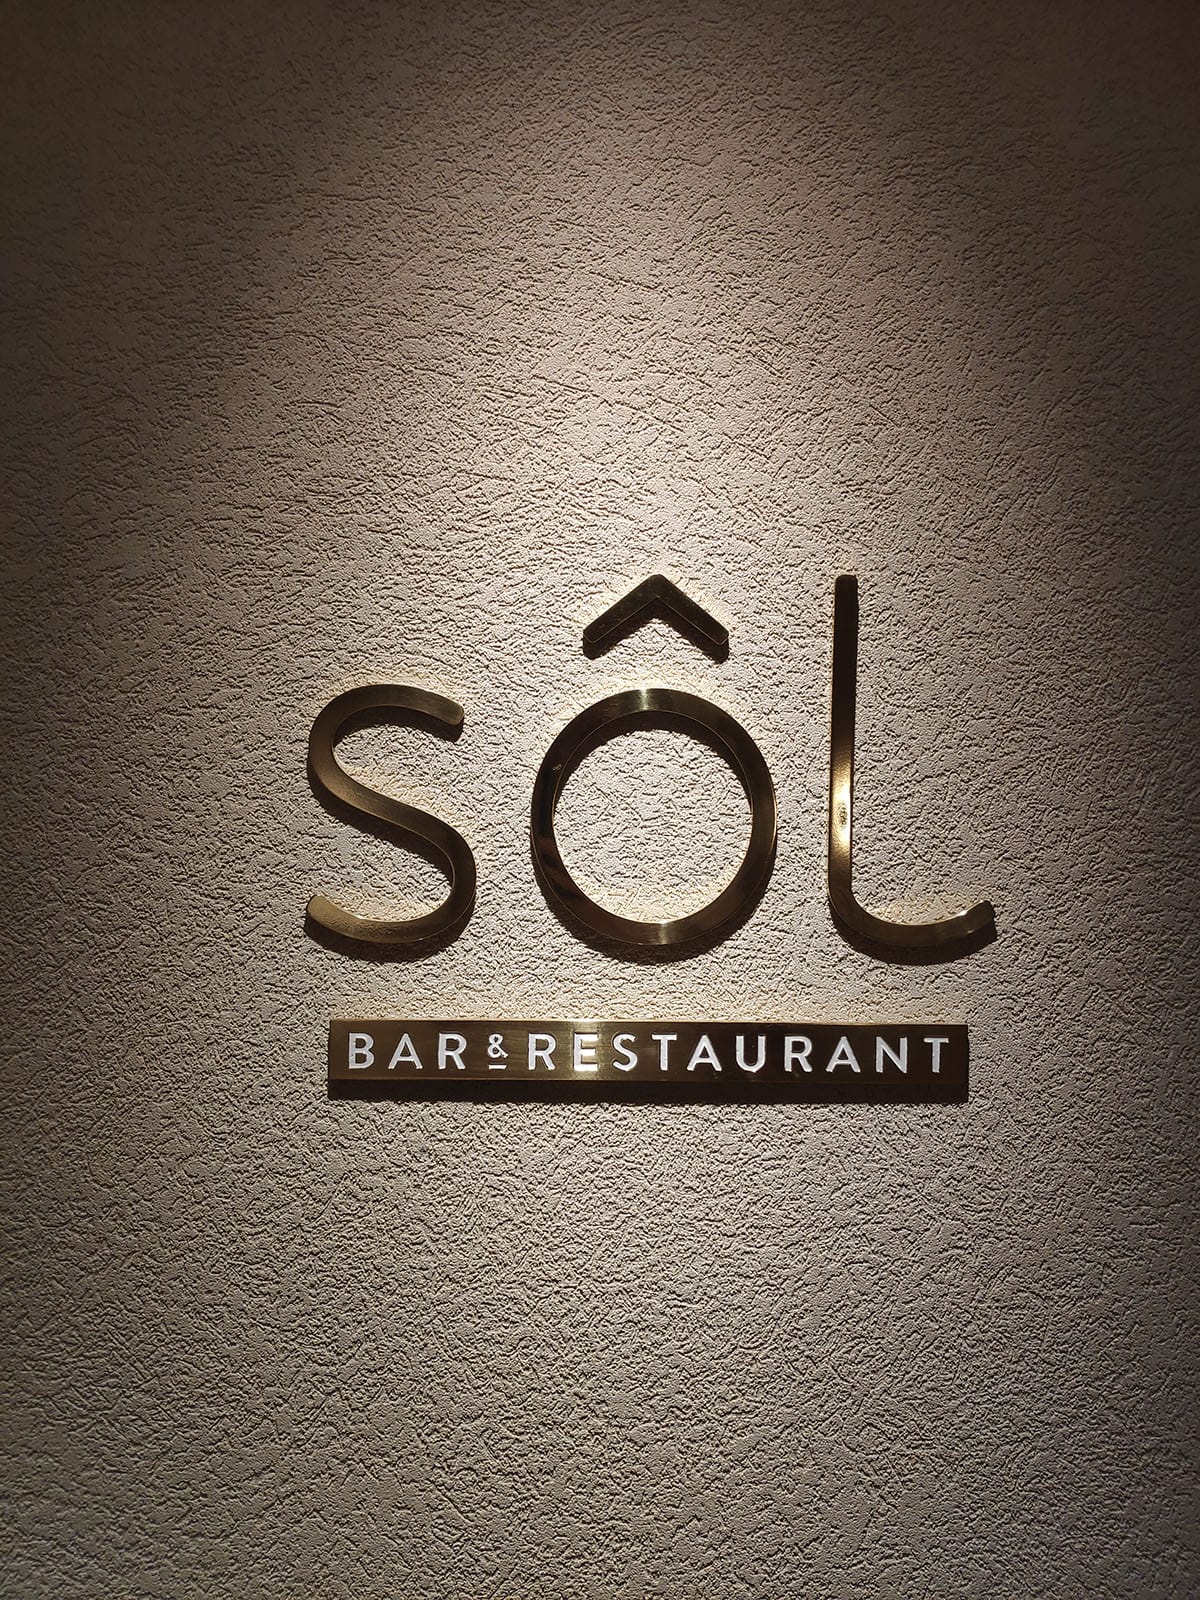 sol rooftop bar logo